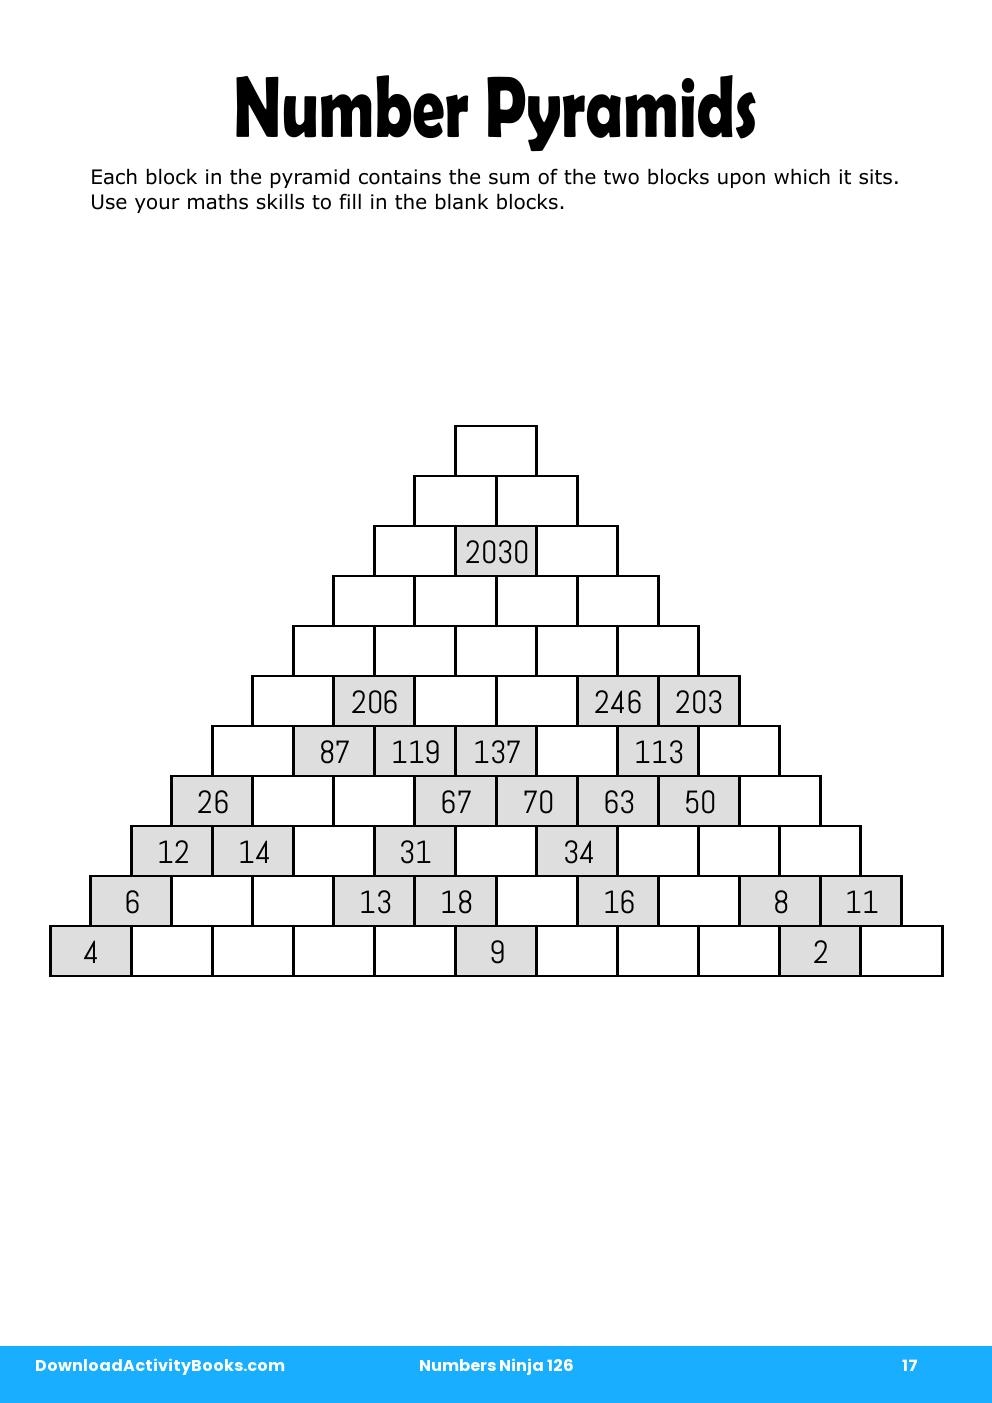 Number Pyramids in Numbers Ninja 126